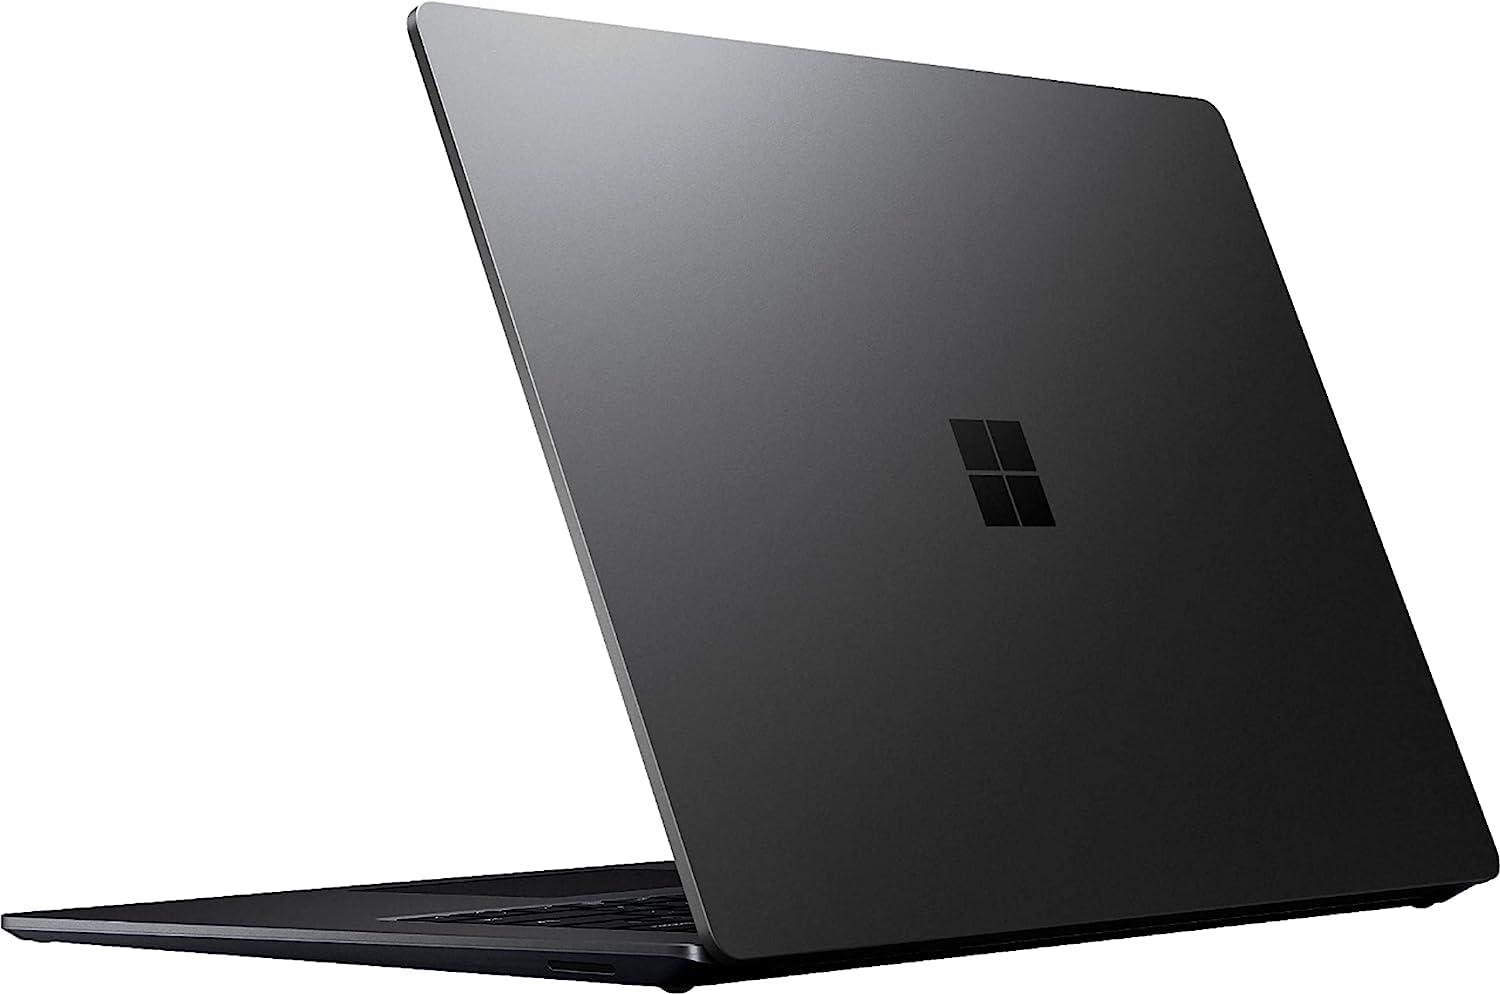 Microsoft Surface Laptop 4 with AMD Ryzen7 4980U Processor, 16GB RAM, 512GB SSD in Black - High Performance with Windows Surface Pro Technology 1W4-00013 (Renewed)